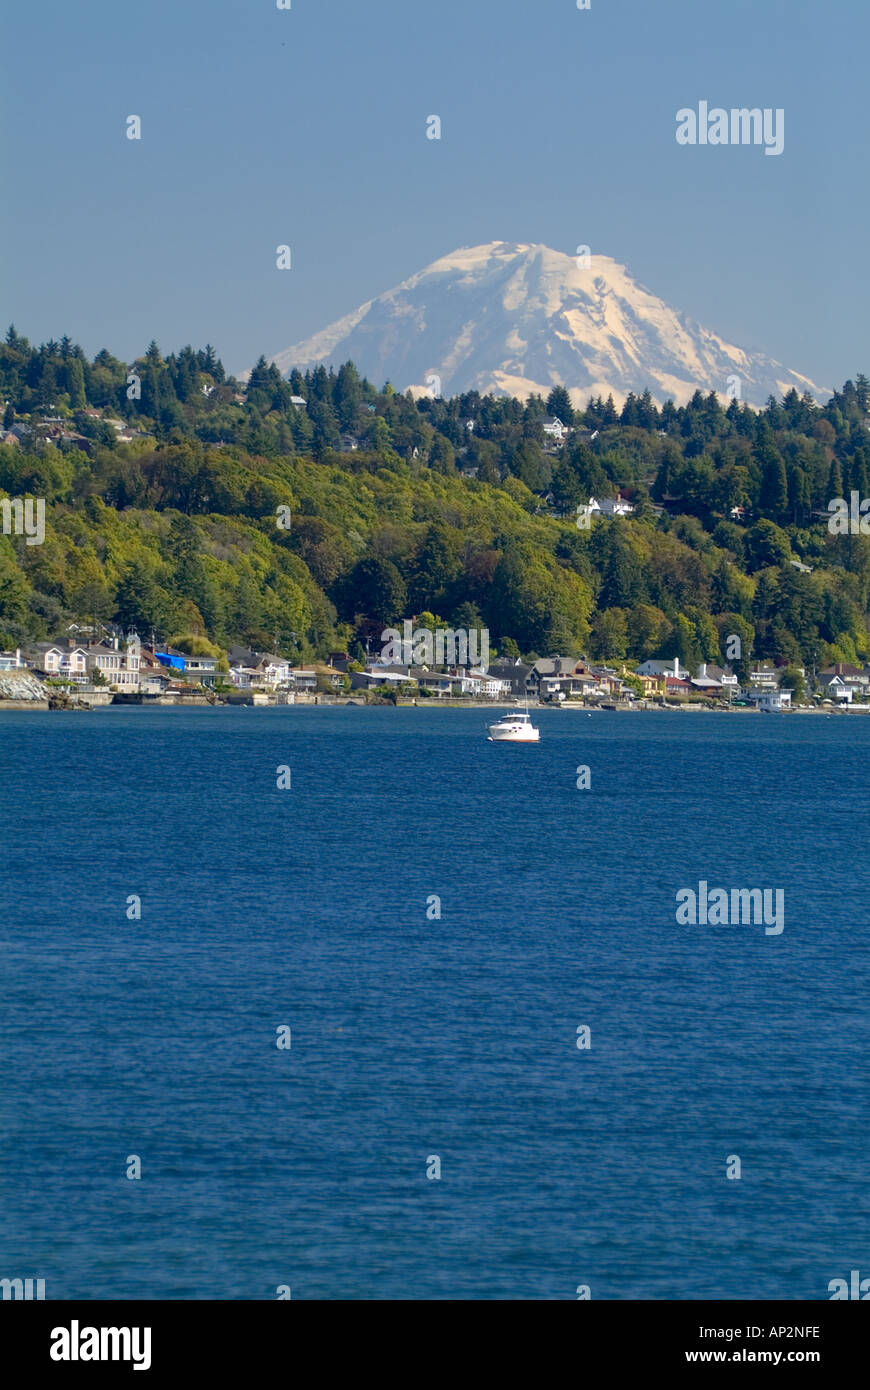 Looking at Week One: Tacoma Rainiers – Itty Bitty Atlas